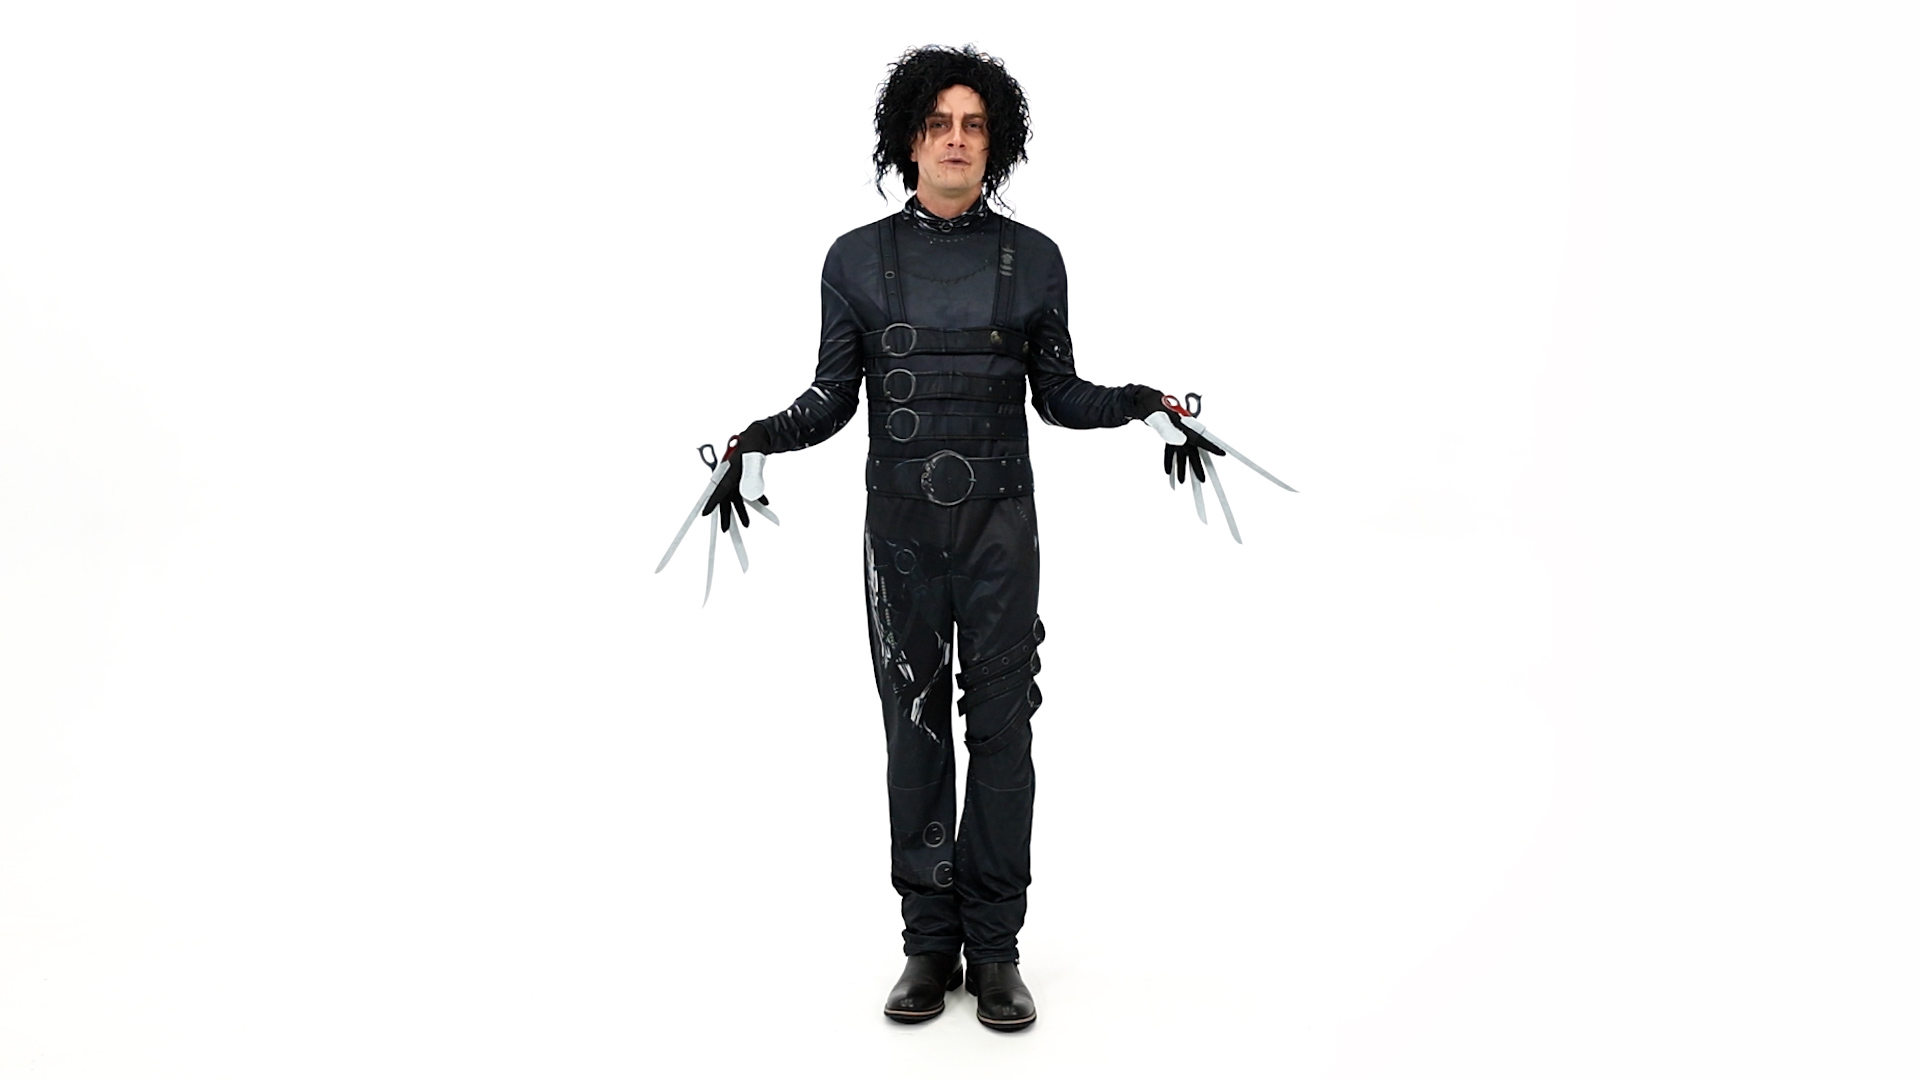 FUN2854AD Edward Scissorhands Costume for Men